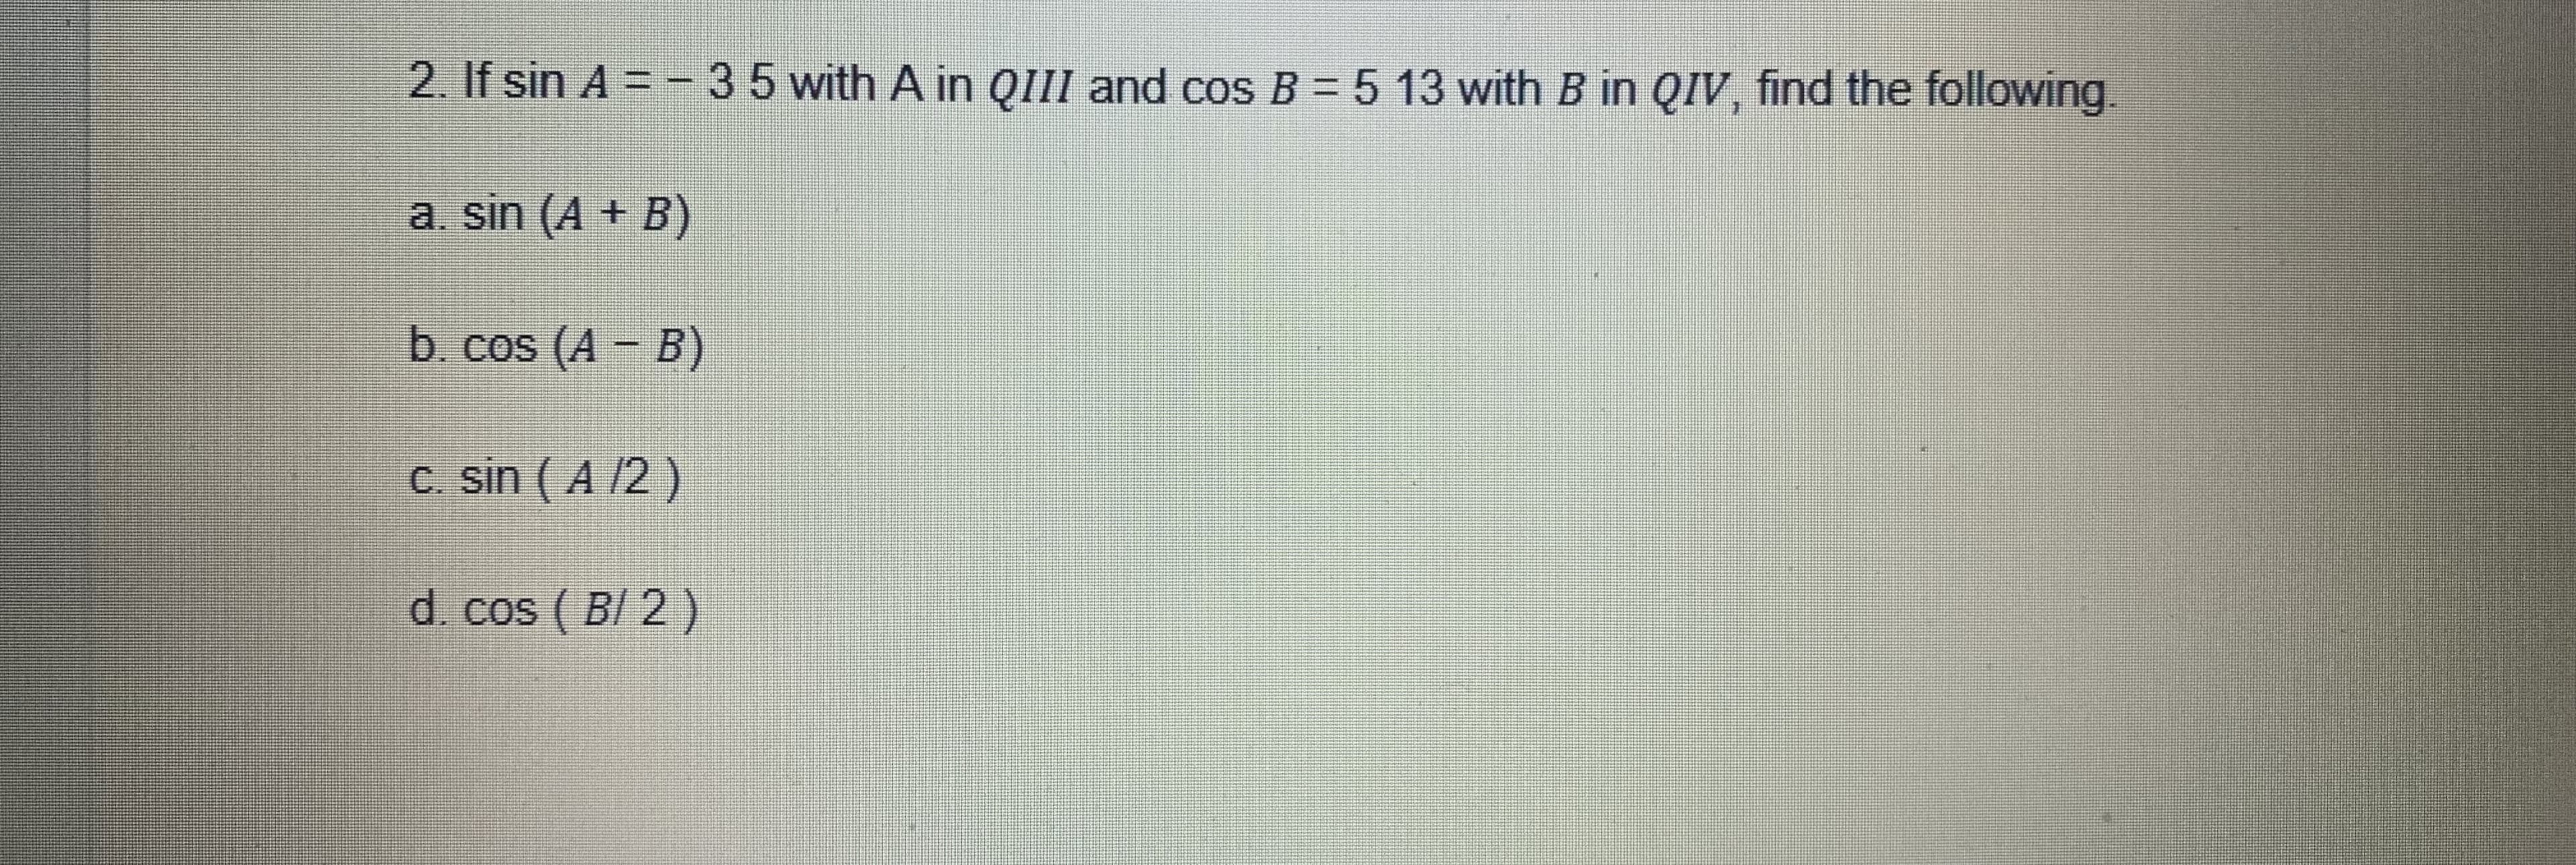 2. If sin A = -35 with A in QIII and cos B = 5 13 with B in QIV, find the following.
a. sin (A + B)
b. cos (A - B)
c. sin ( A /2 )
d. cos ( B/ 2 )
